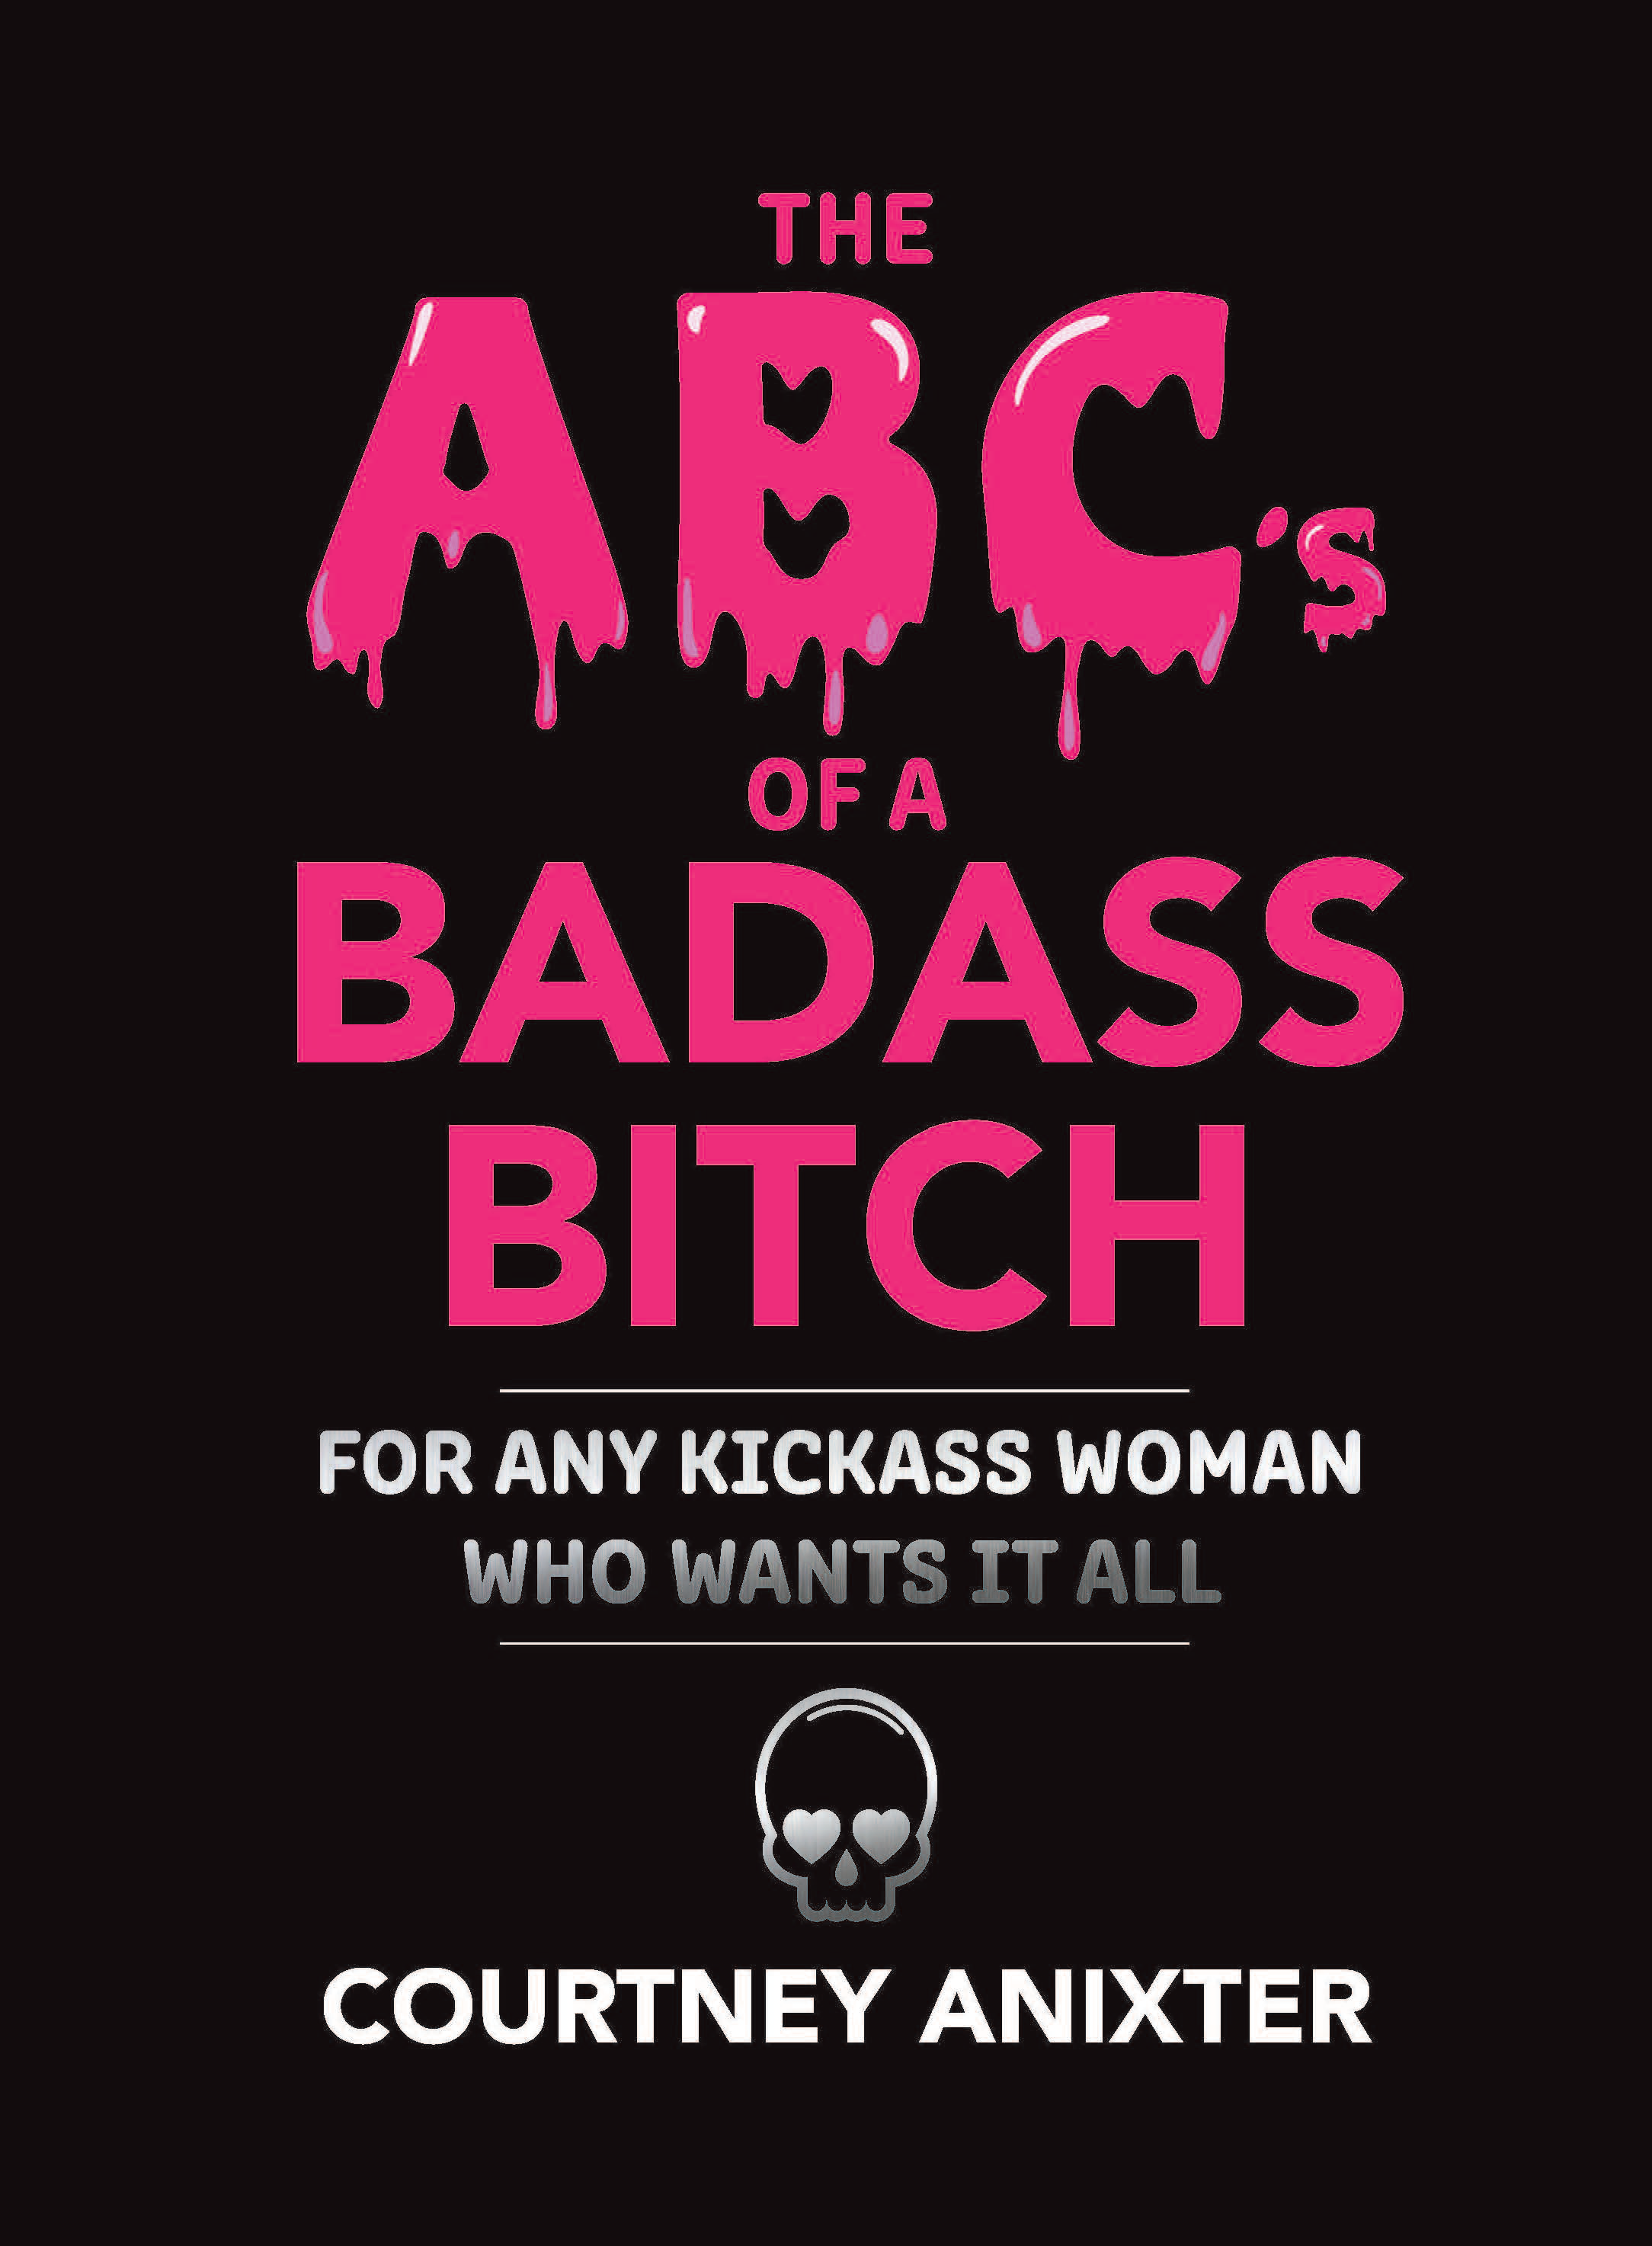 The ABC's of a Badass Bitch